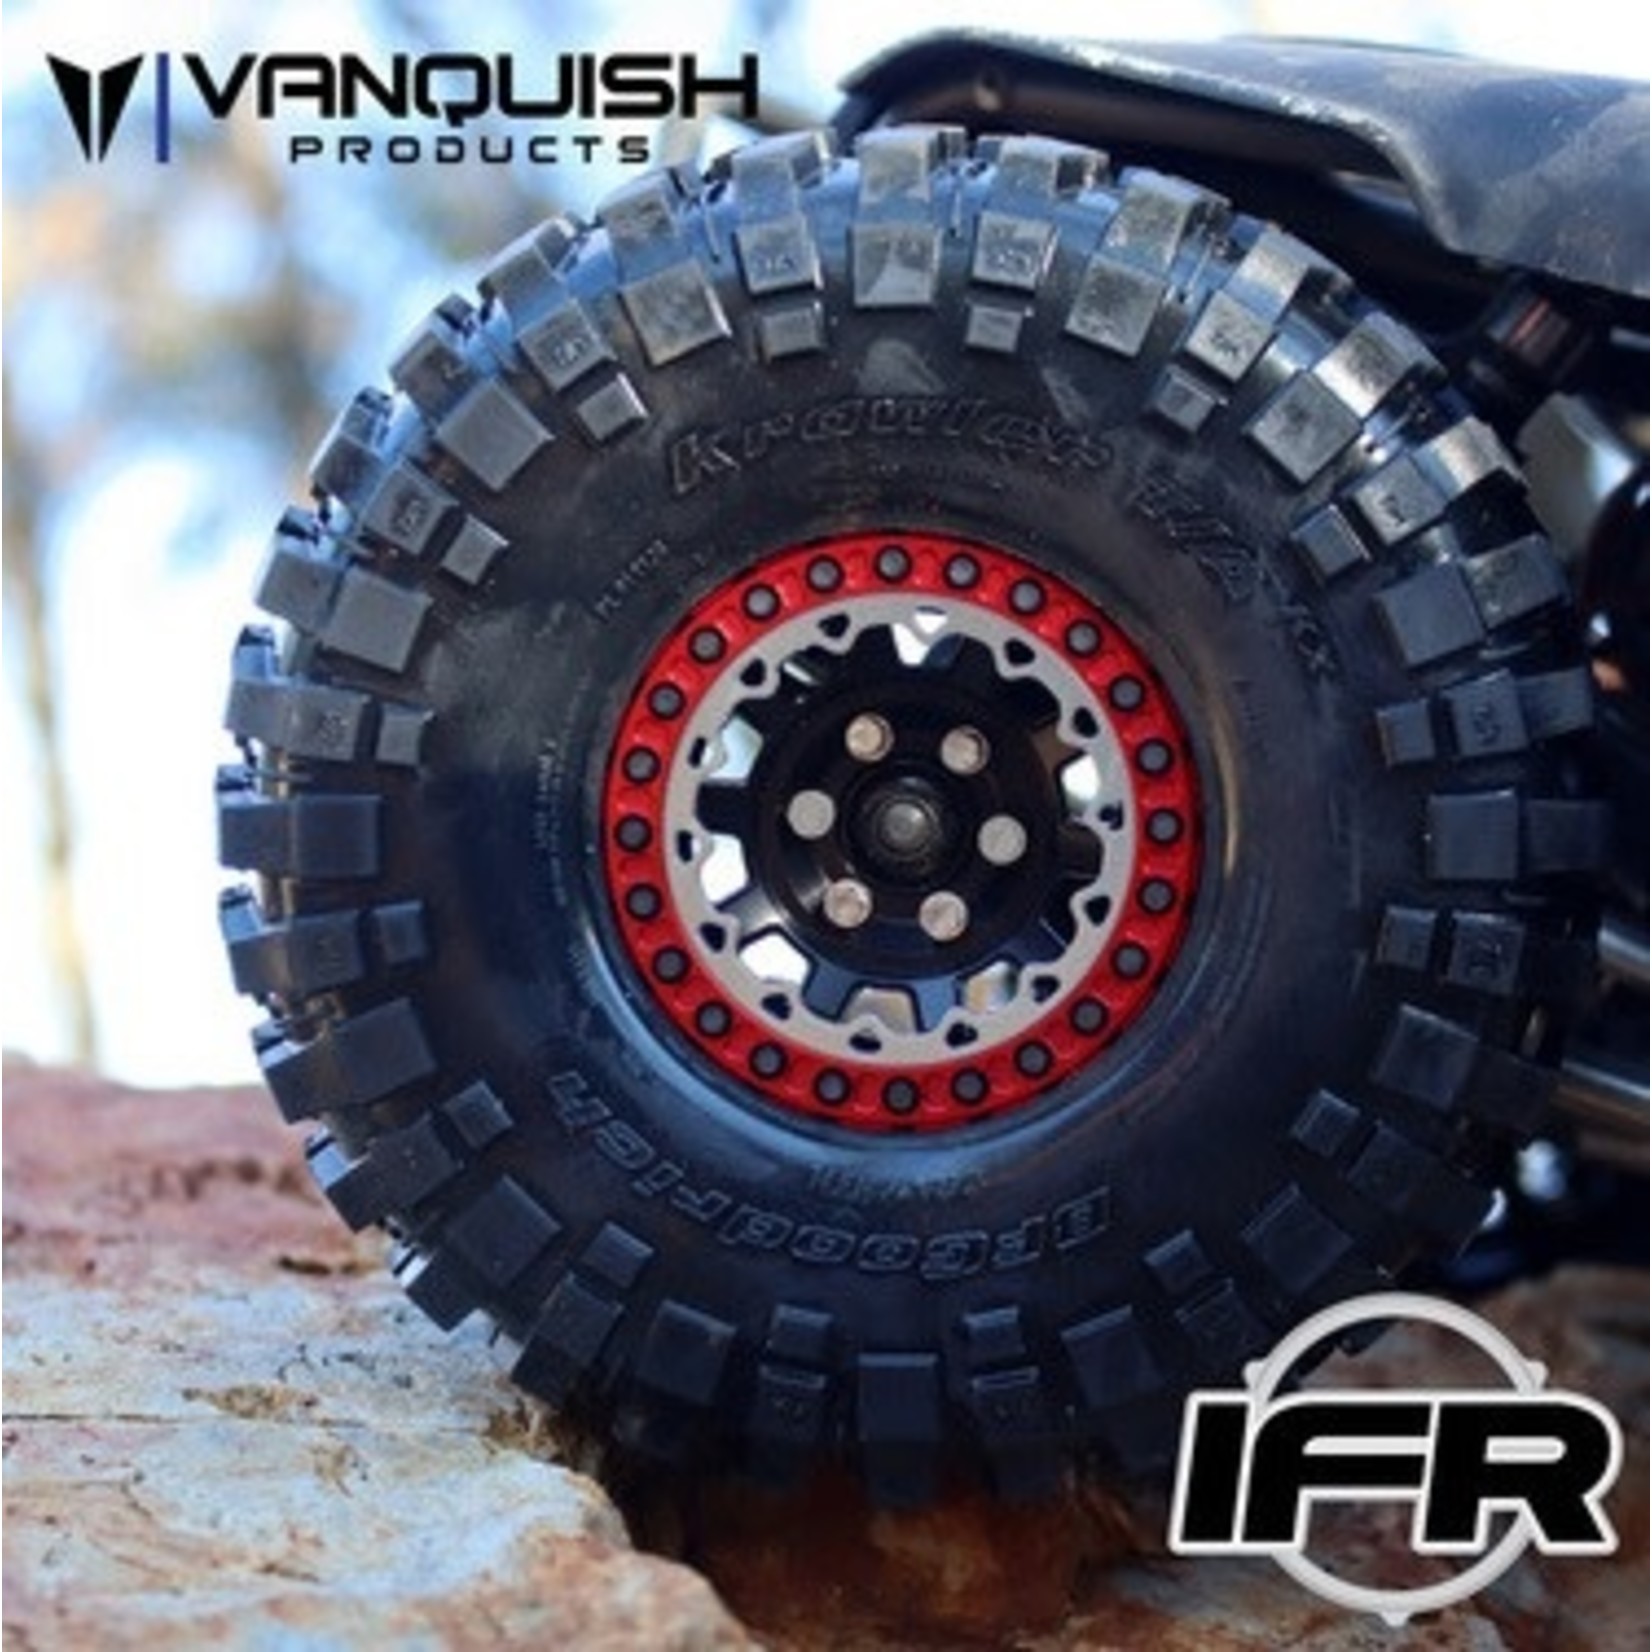 Vanquish Products Vanquish Products 1.9" IFR Original Beadlock Ring (Grey) #VPS05402